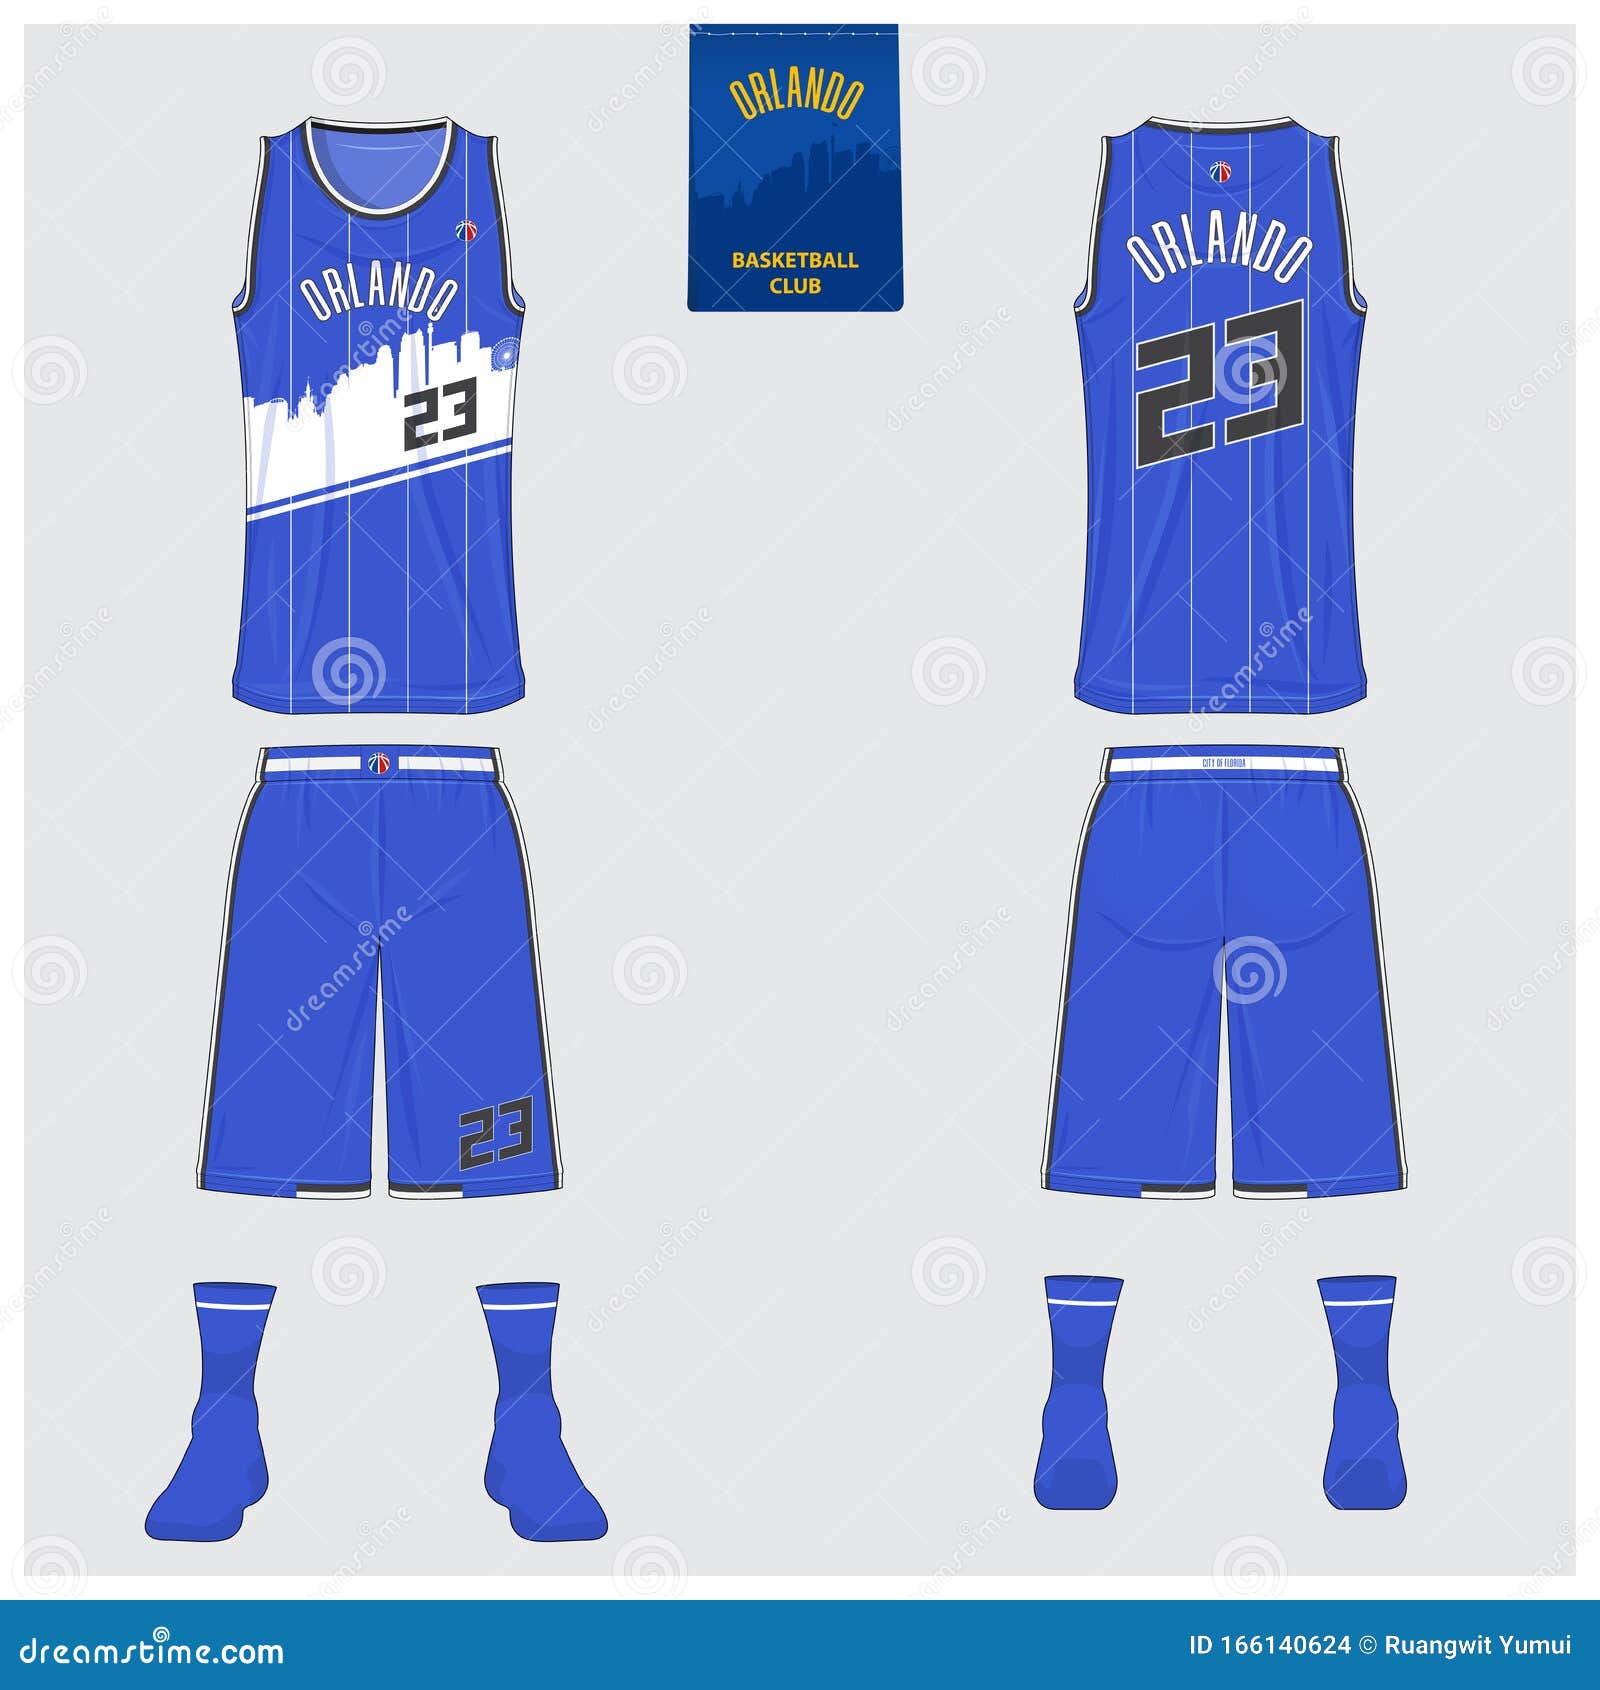 Basketball Uniform Mockup Template Design for Basketball Club. Tank Top ...